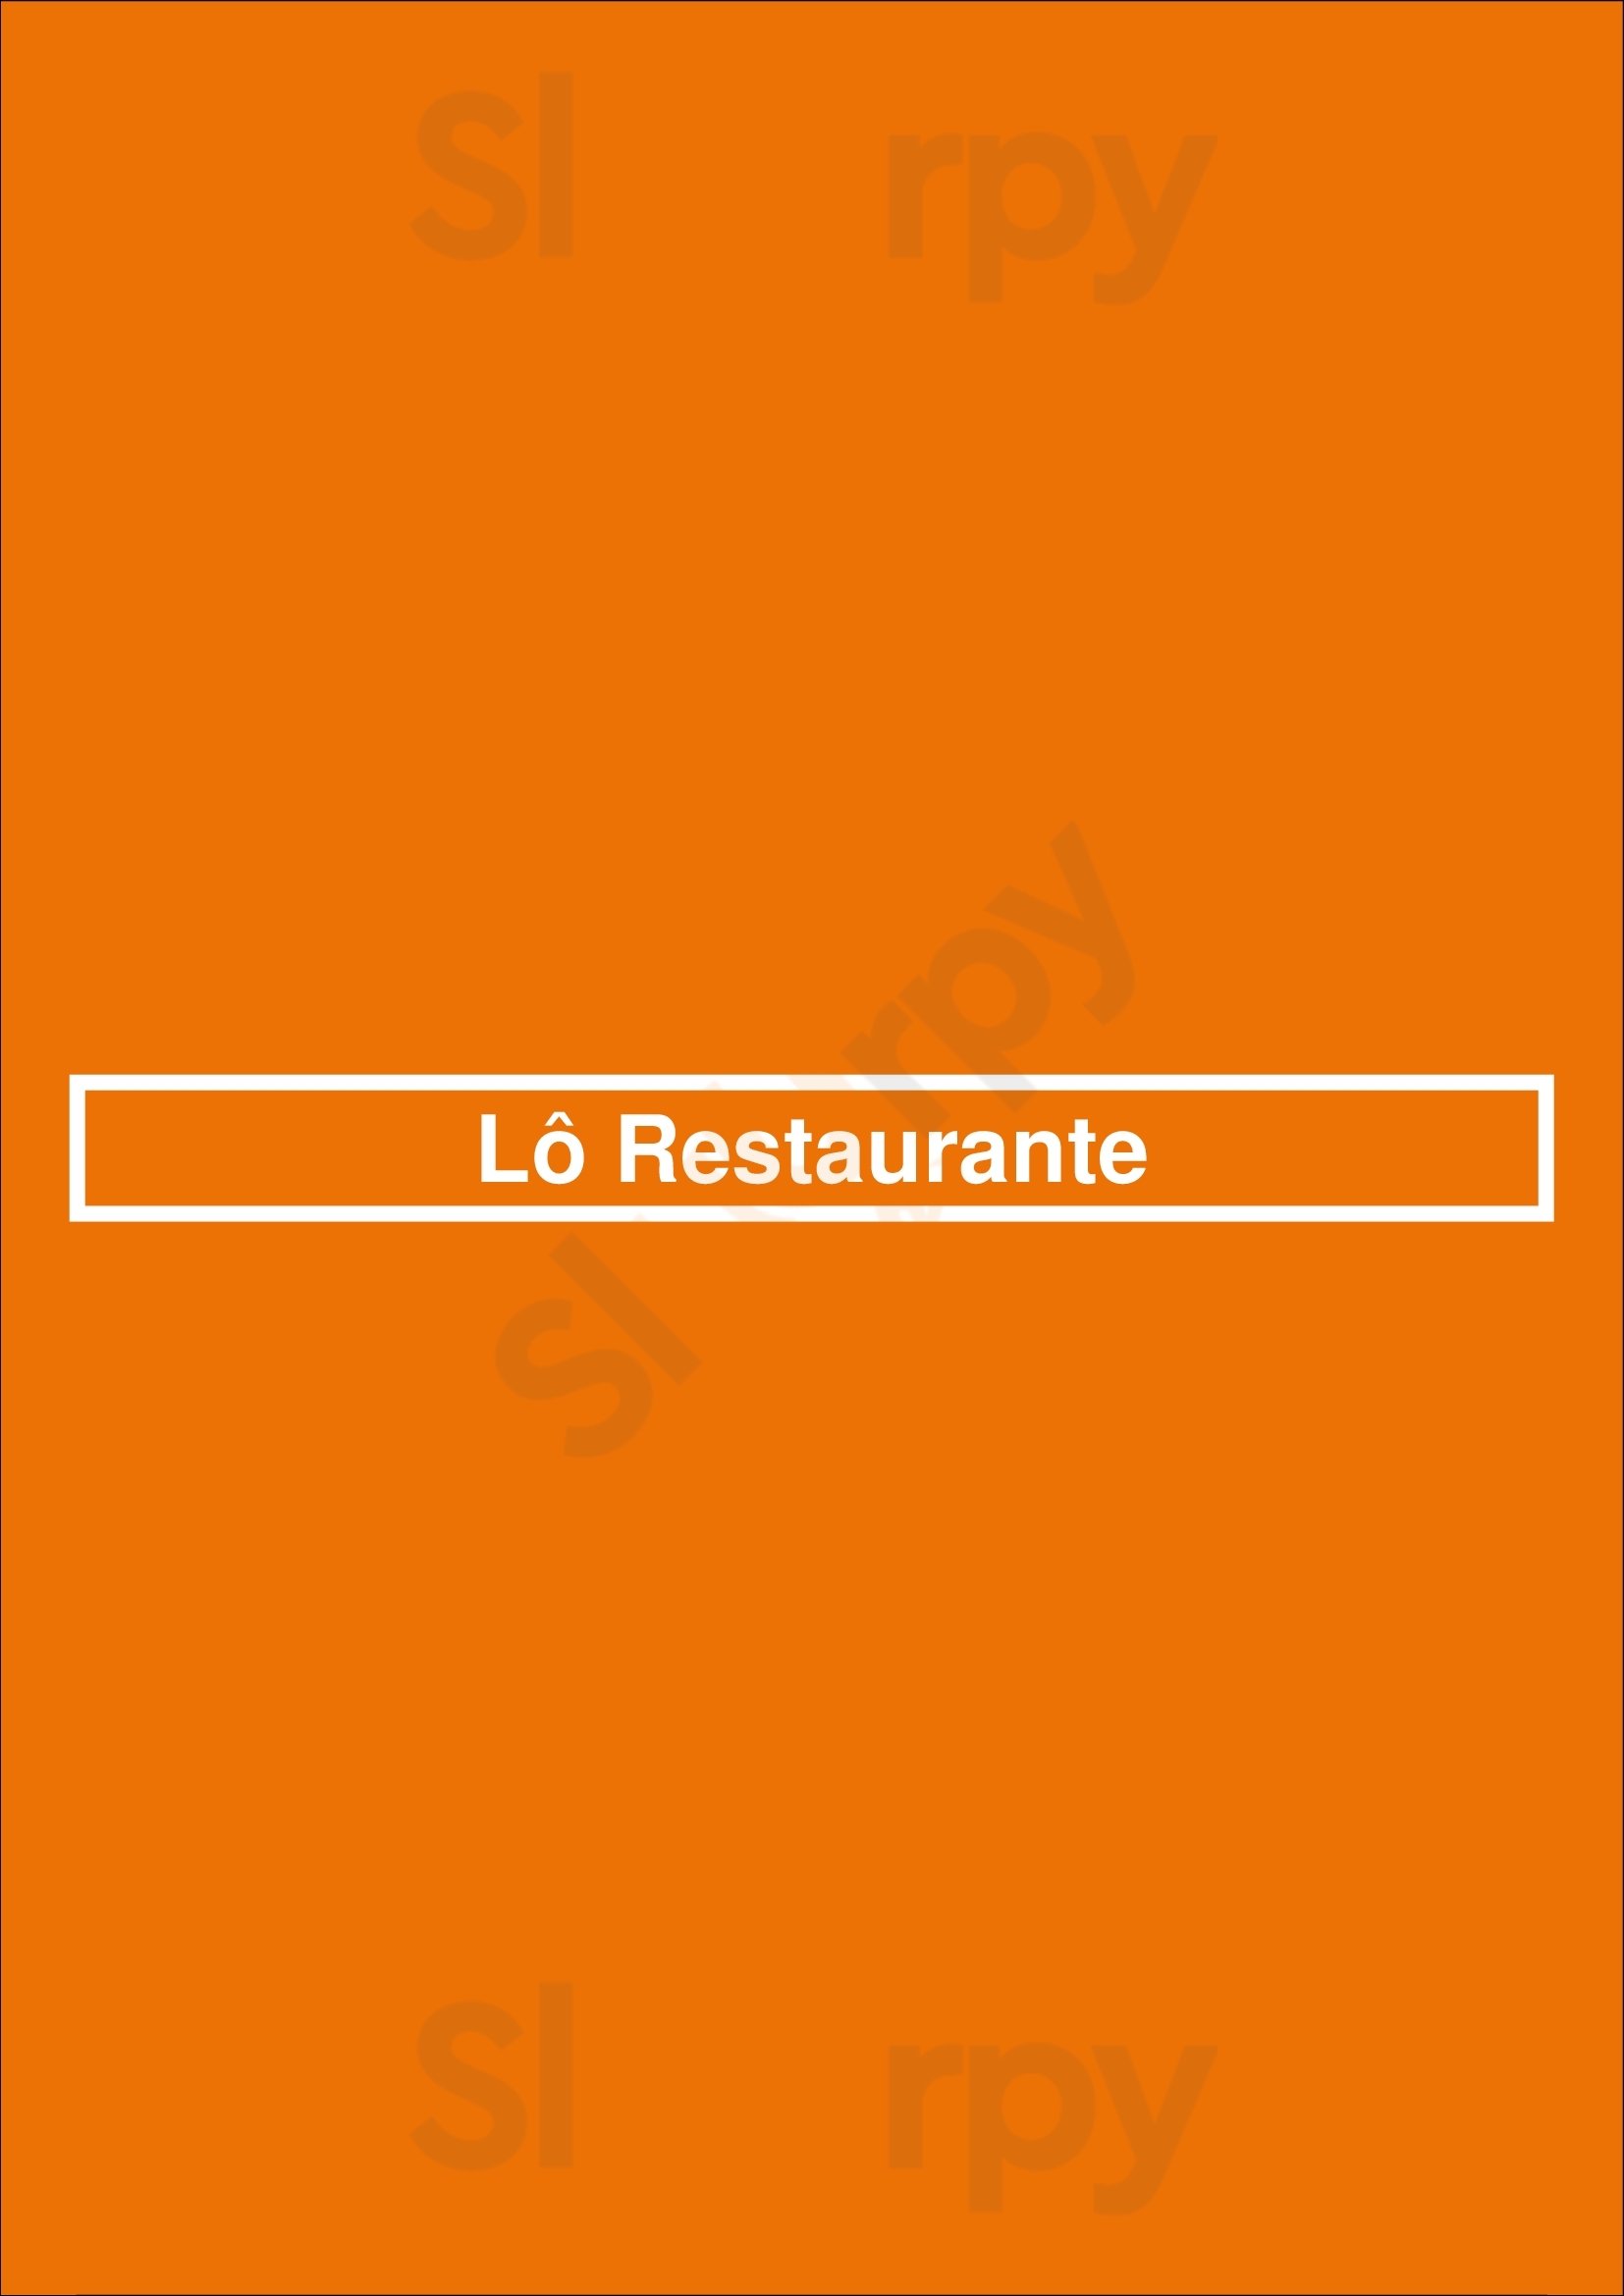 Lô Restaurante Fortaleza Menu - 1